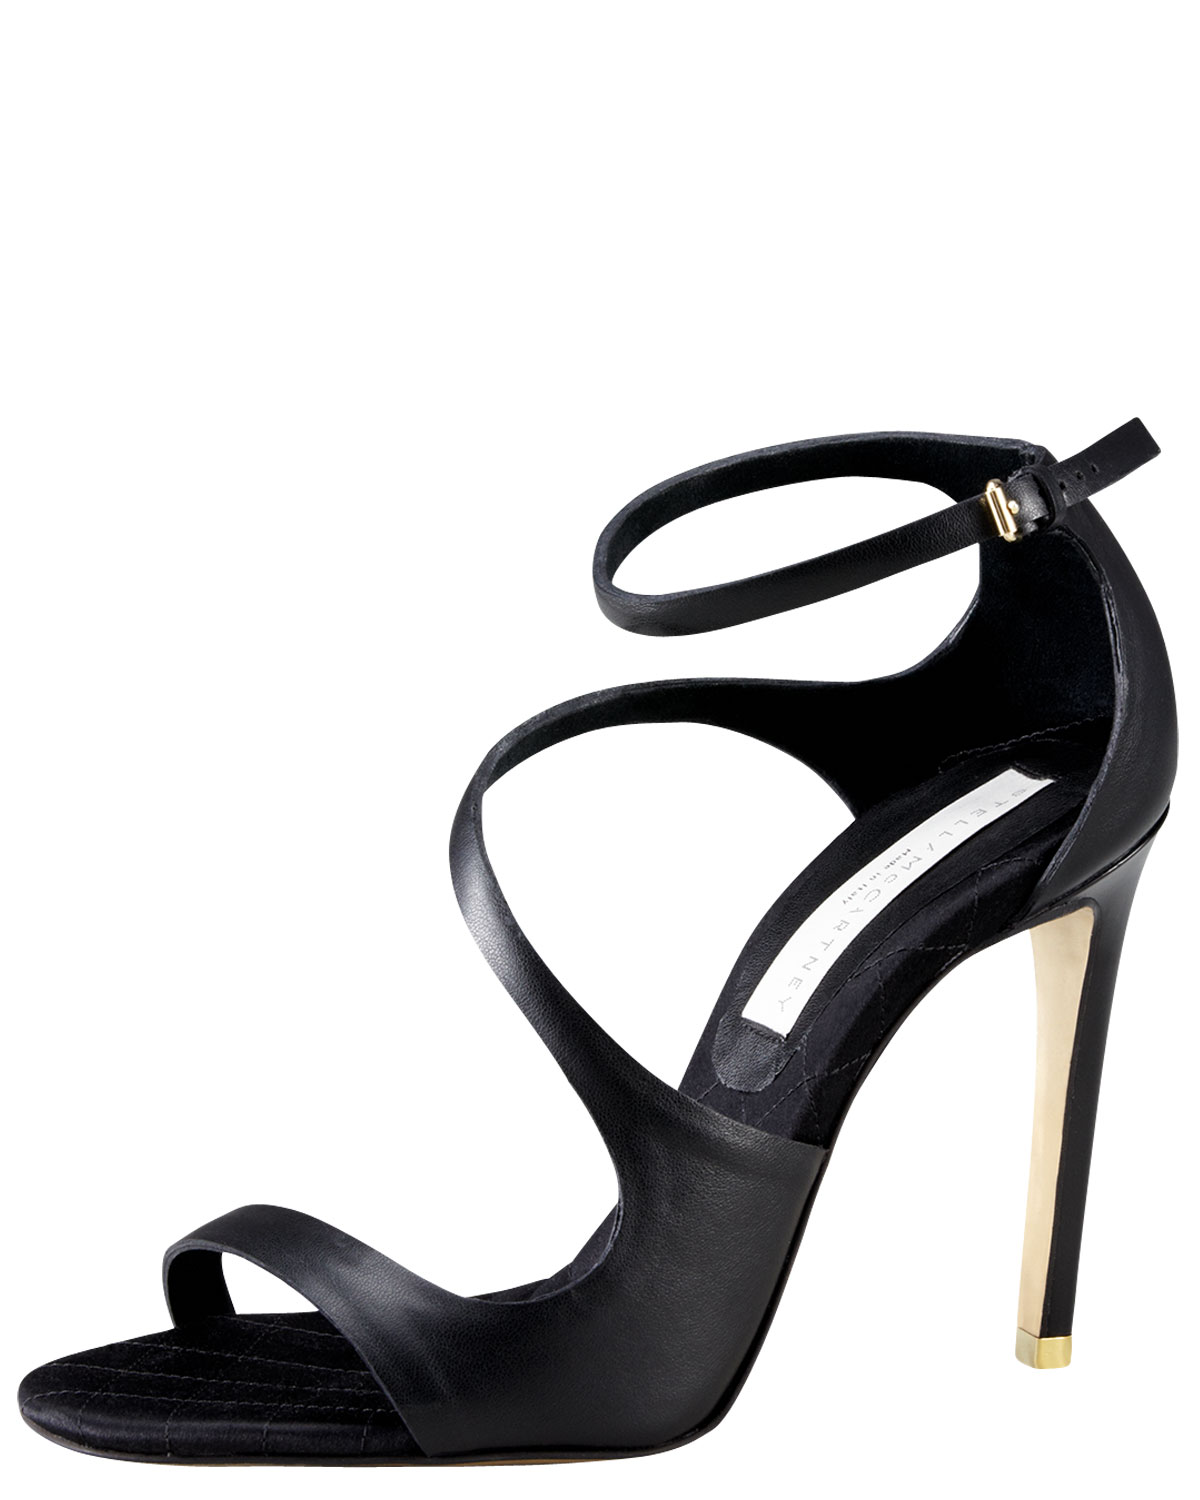 Lyst - Stella Mccartney Asymmetric Strappy Sandal in Black